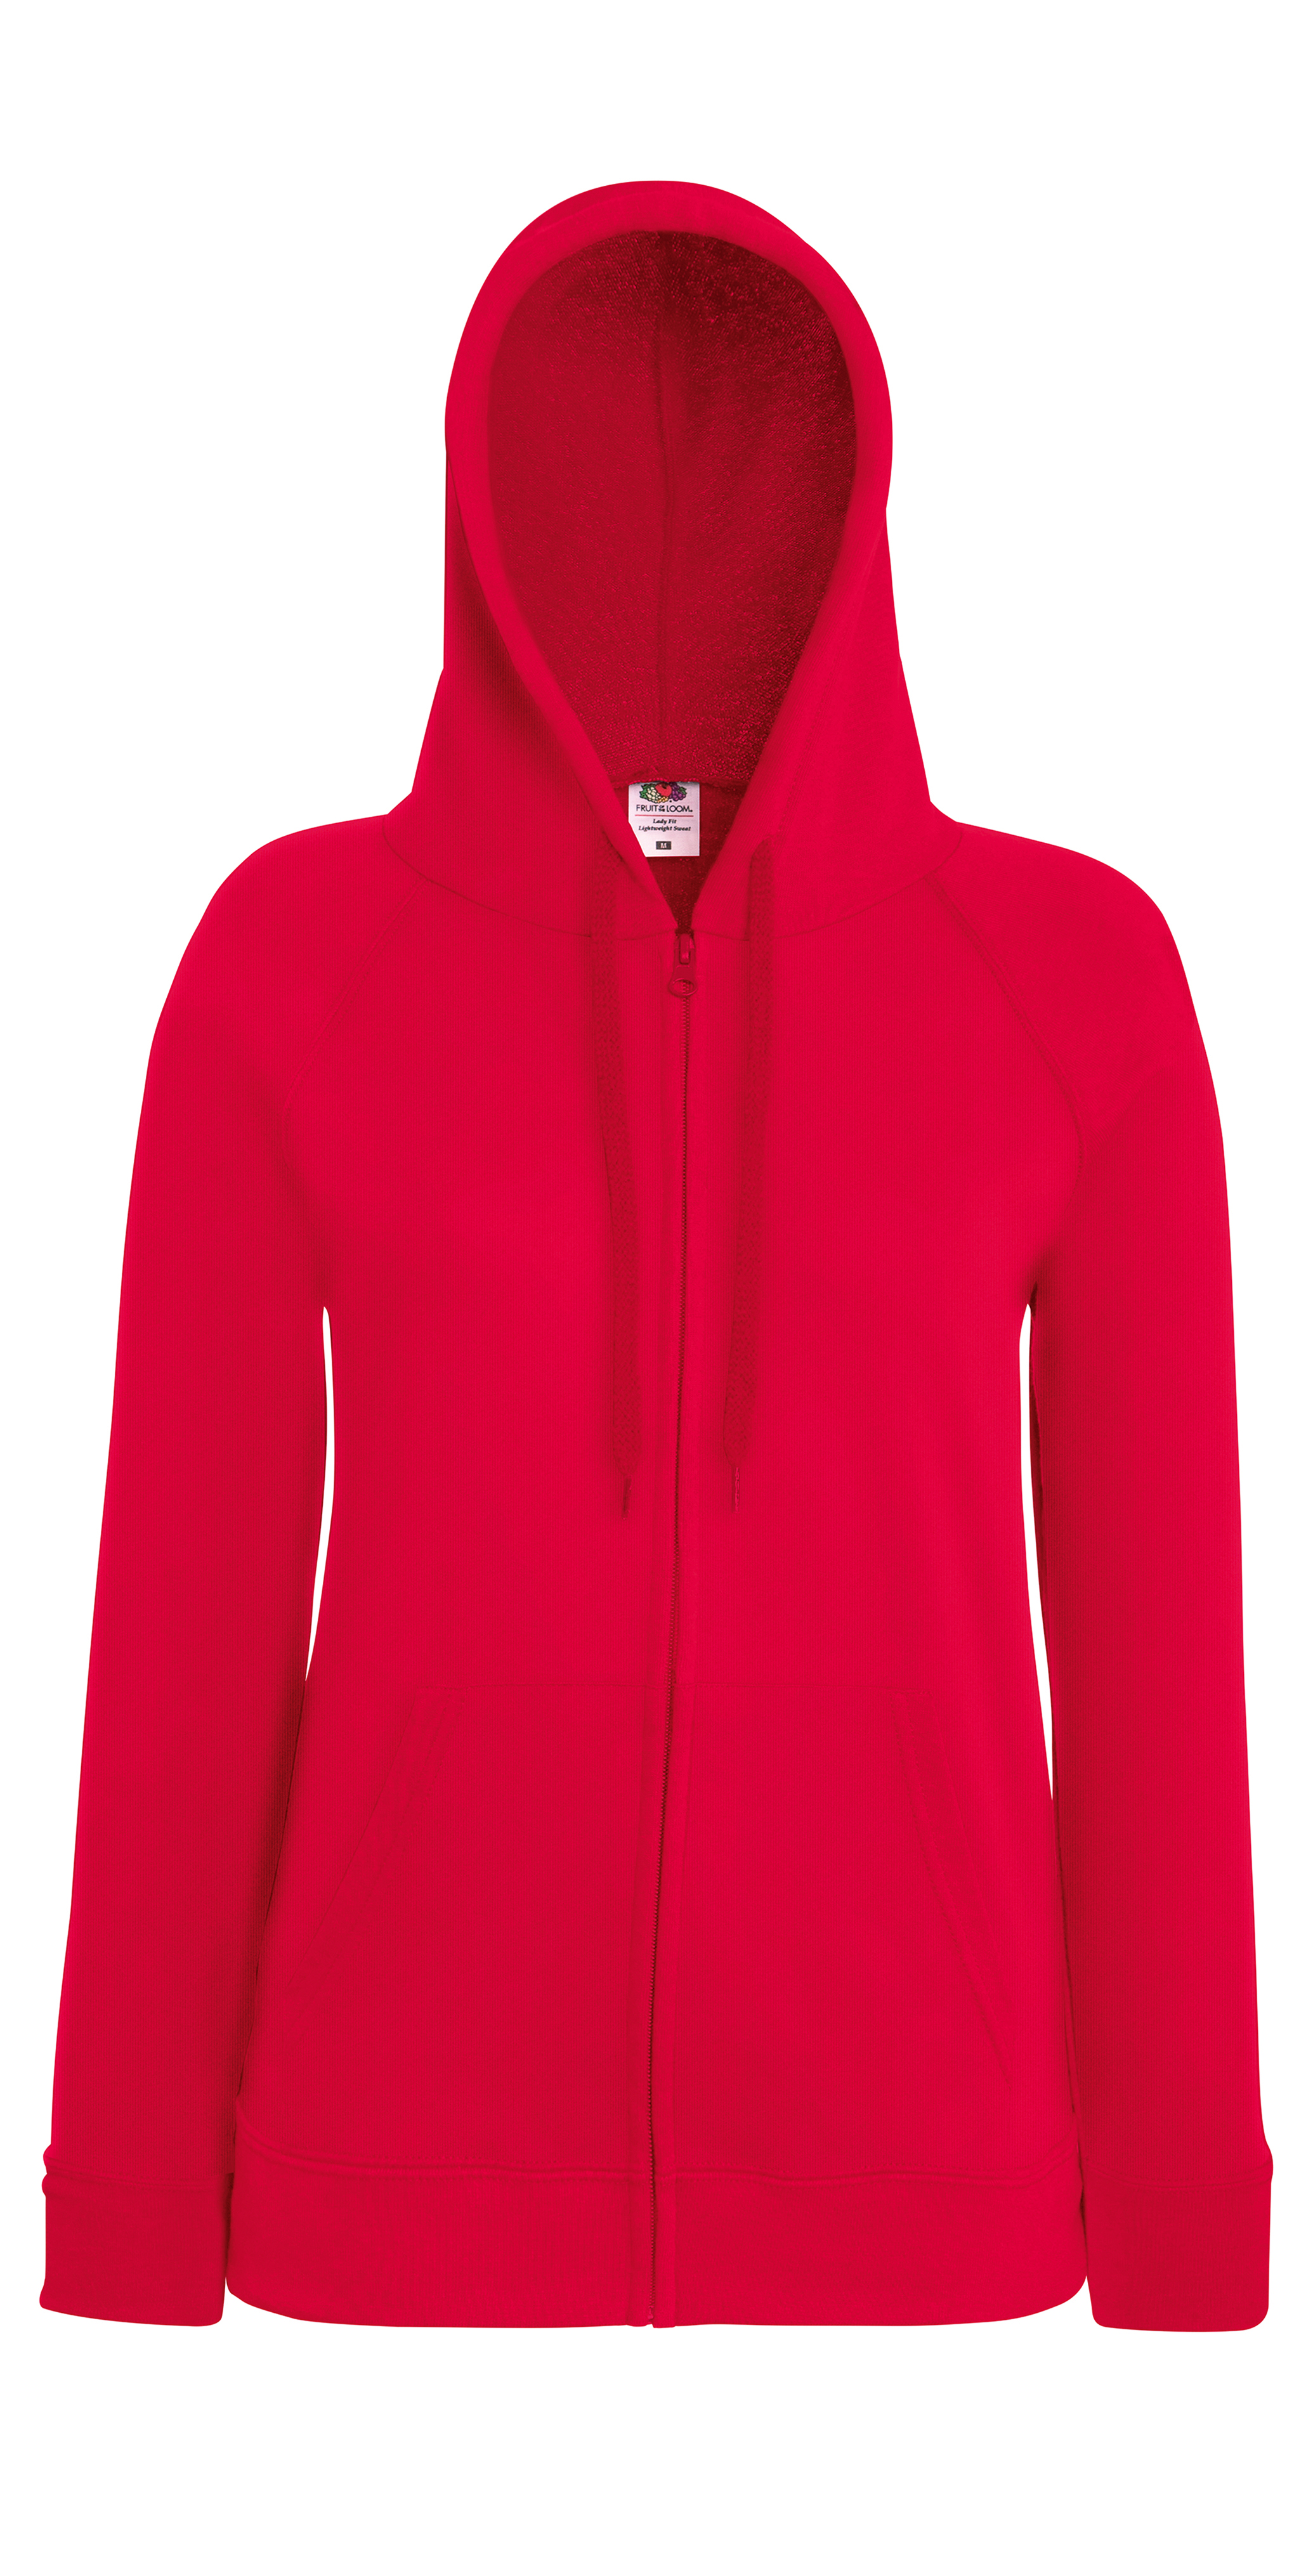 ax-httpswebsystems.s3.amazonaws.comtmp_for_downloadfruit-of-the-loom-womens-lightweight-hooded-sweatshirt-jacket-red.jpeg